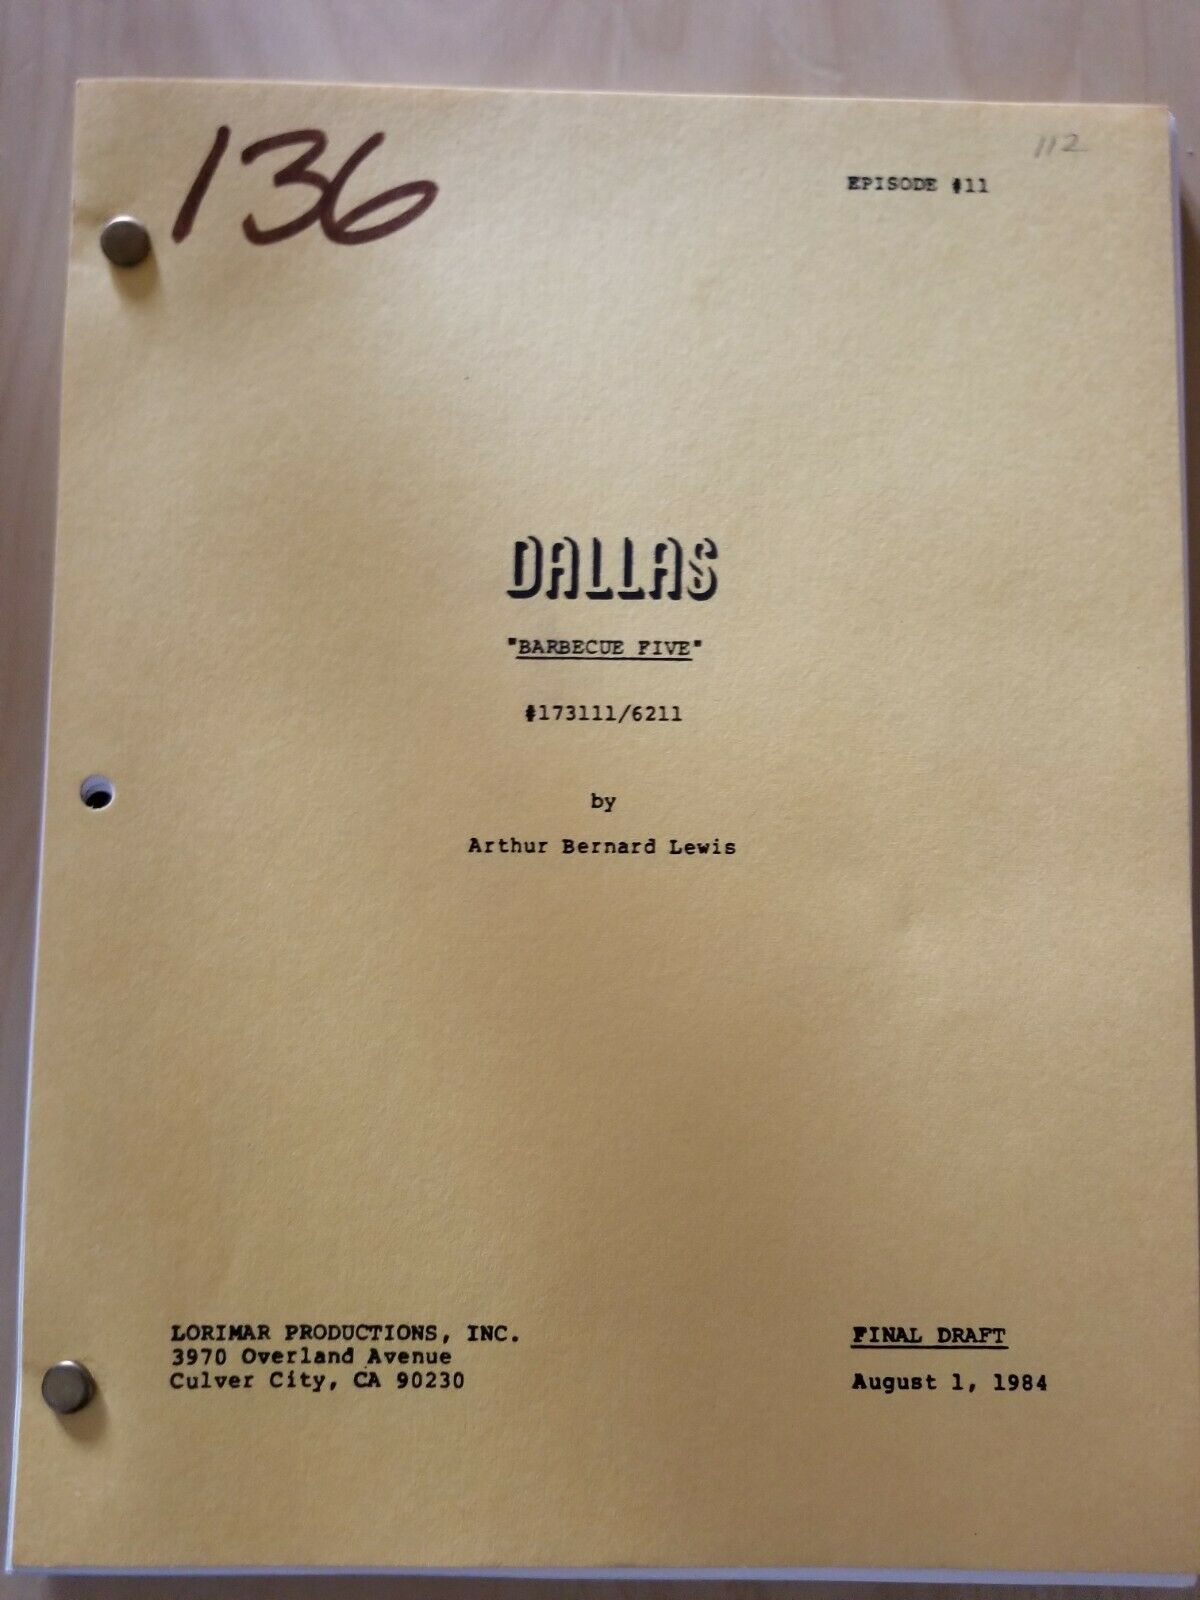 Dallas TV Show Barbecue Five 1984 Final Draft script Presley Duffy Hagman